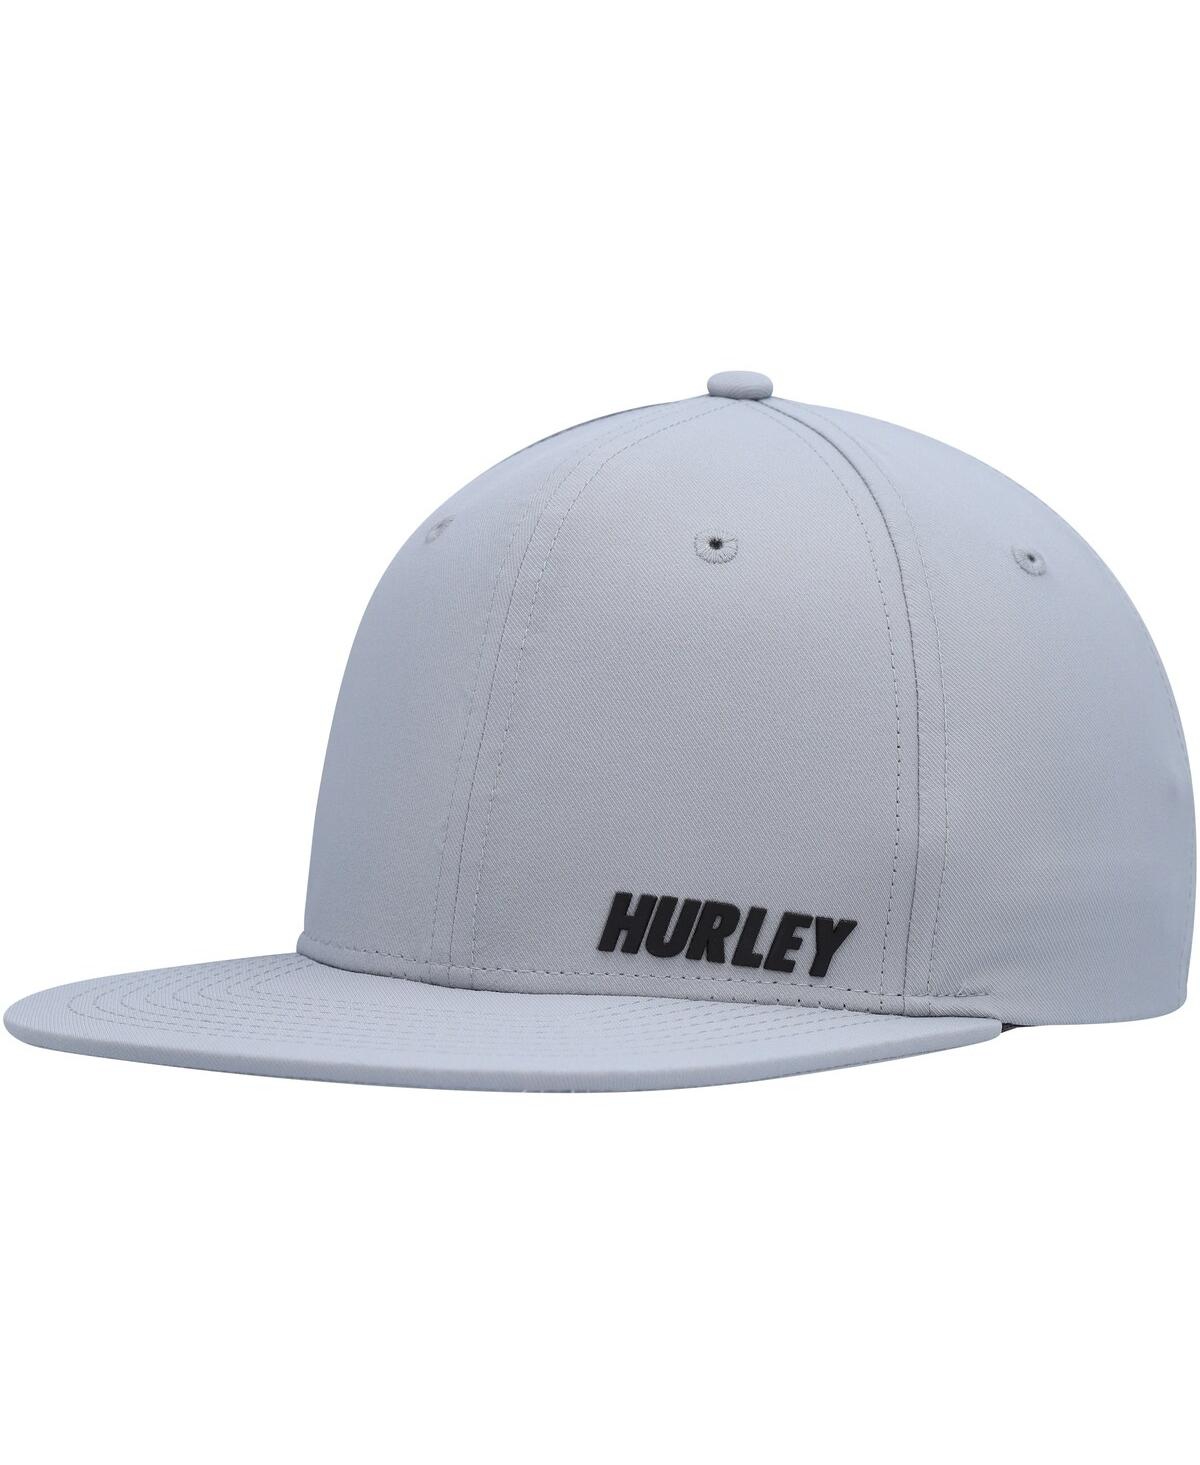 Hurley Men's  Gray Phantom Ridge Zipperback Adjustable Hat